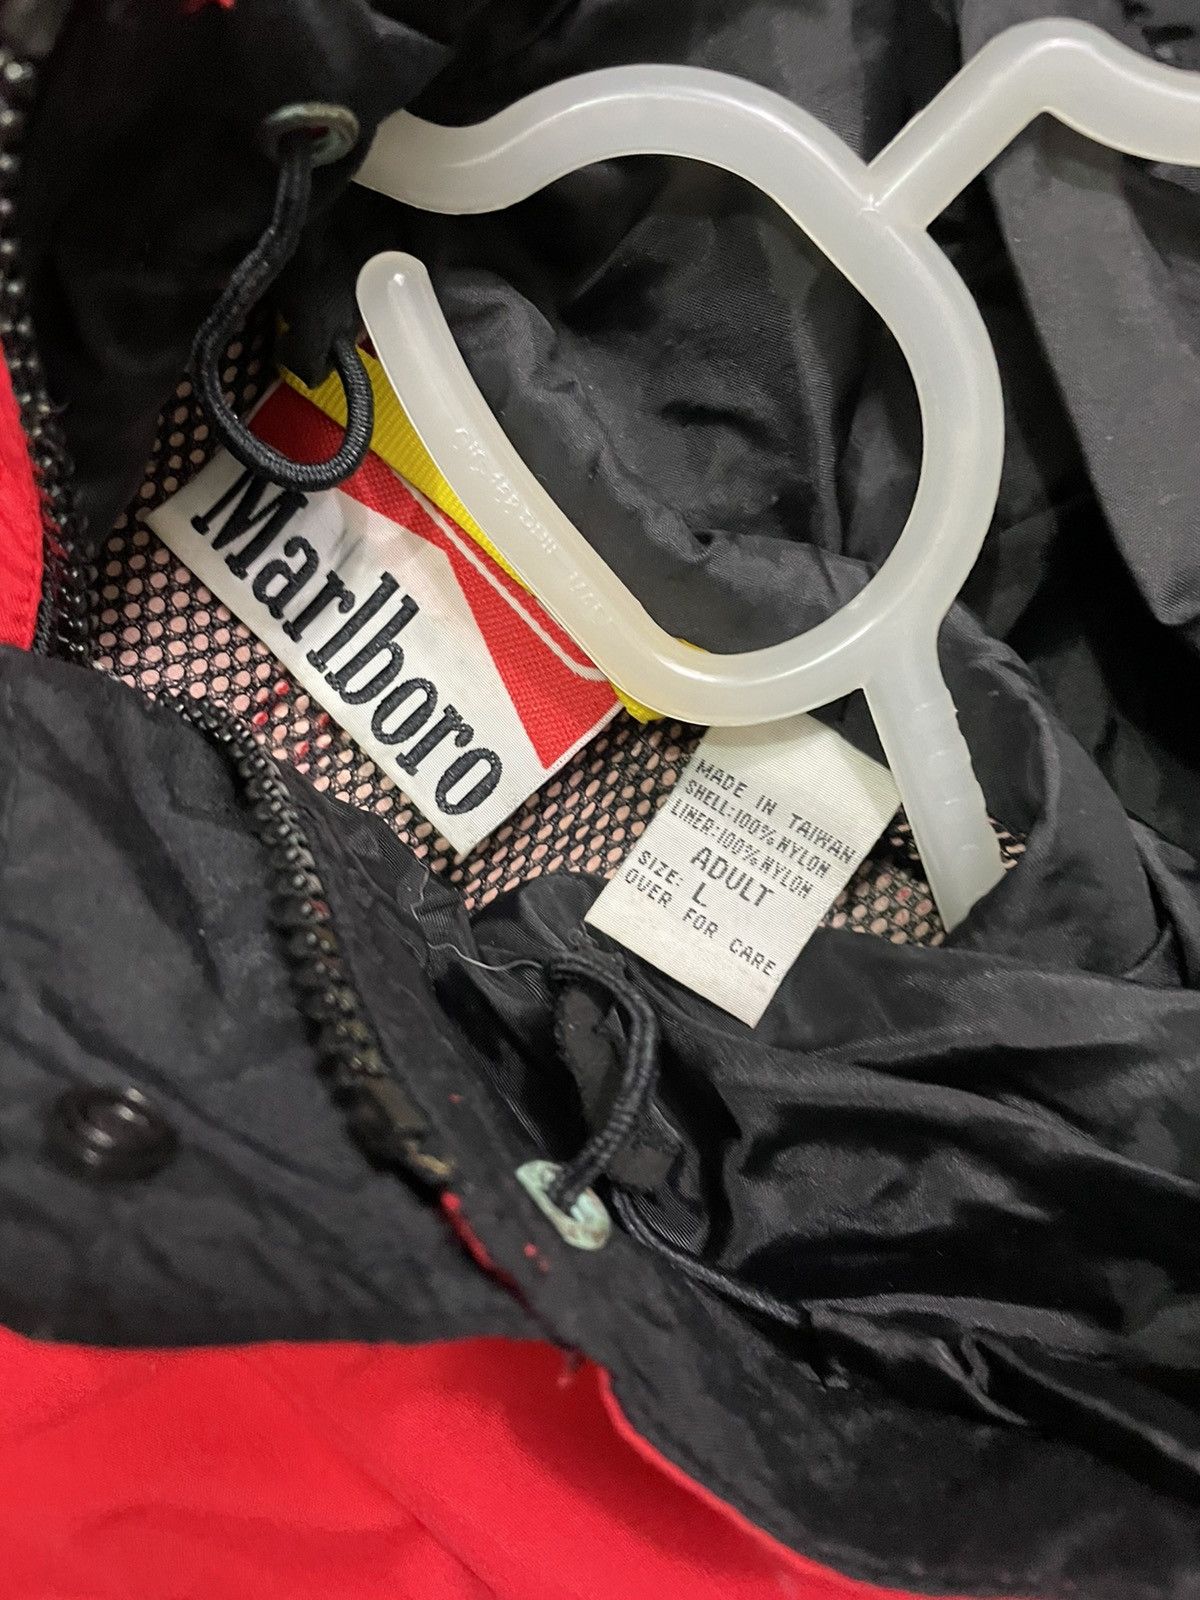 Marlboro Marlboro Adventure Team Jacket Size US L / EU 52-54 / 3 - 3 Thumbnail